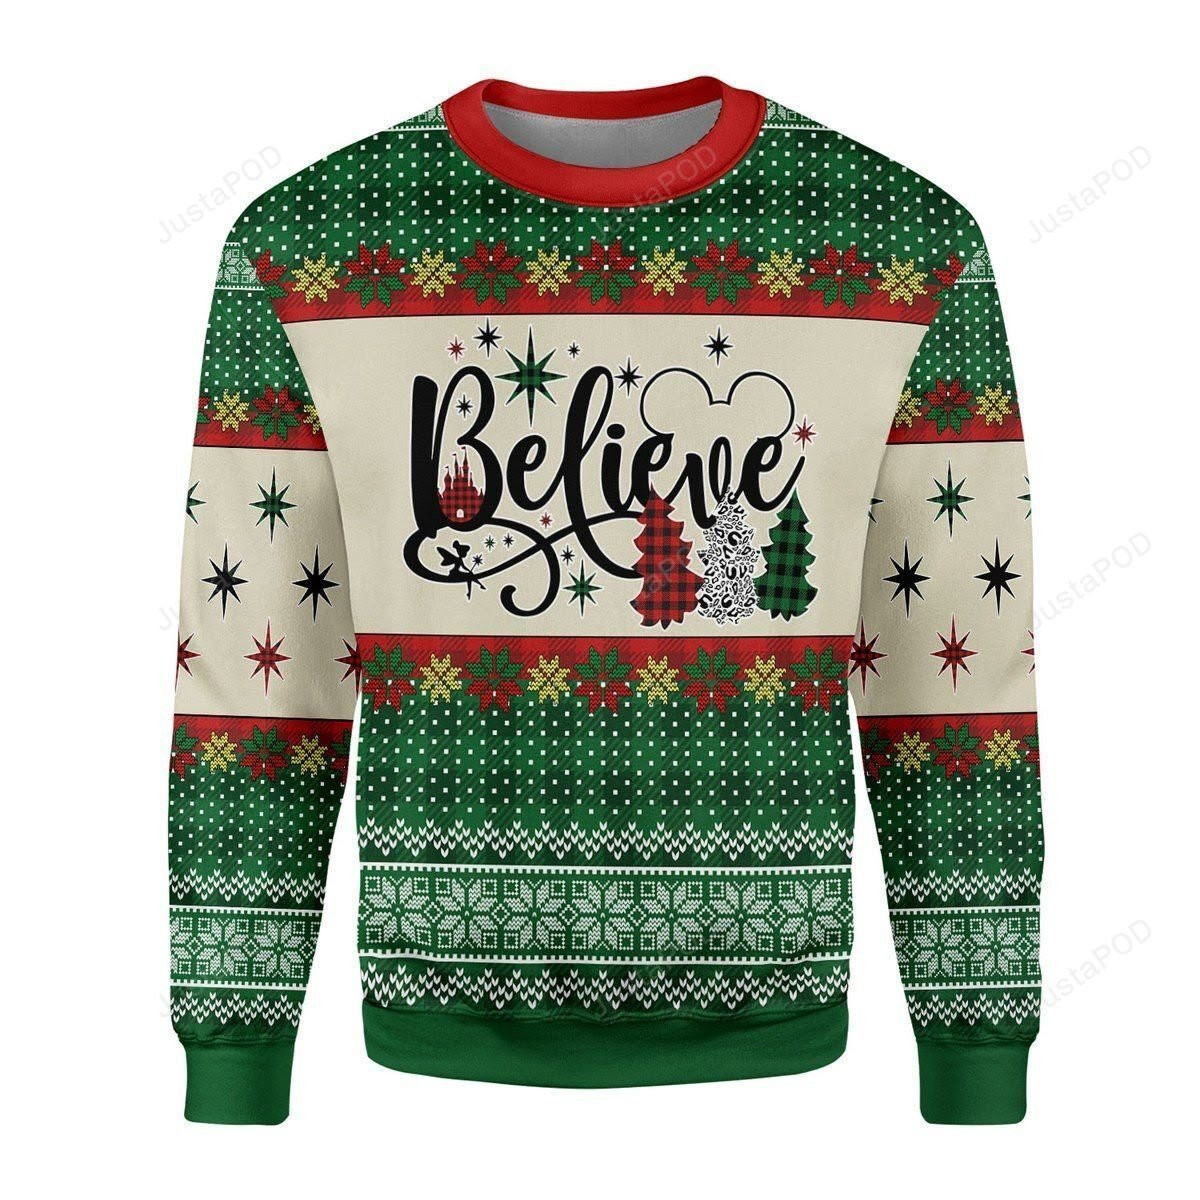 Believe Ugly Christmas Sweater All Over Print Sweatshirt Ugly Sweater